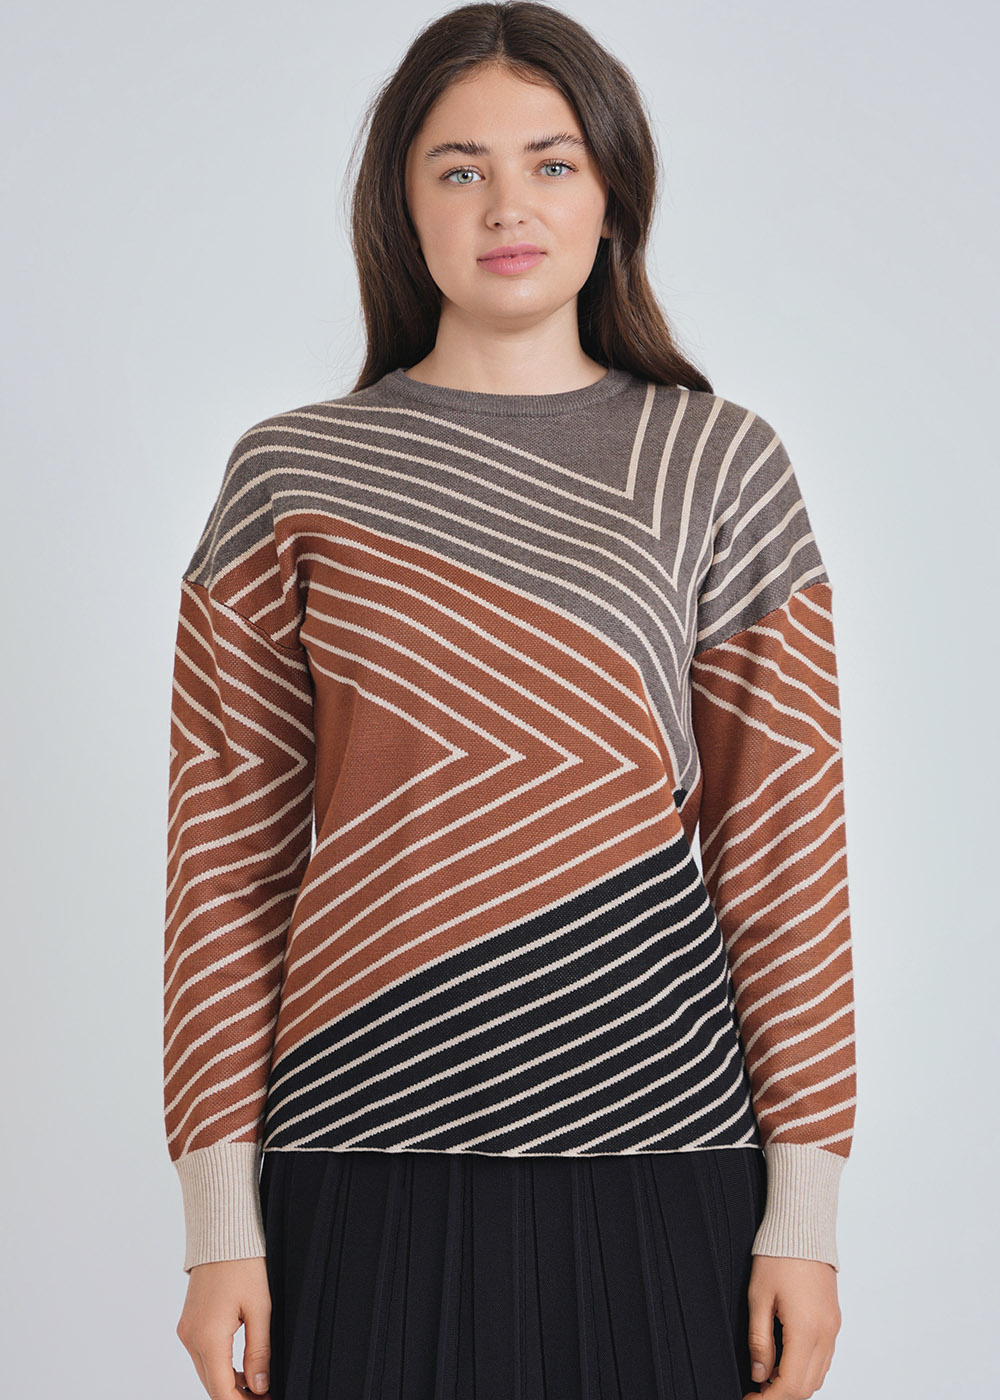 Multi-Hued Line Patterned Knit Sweater